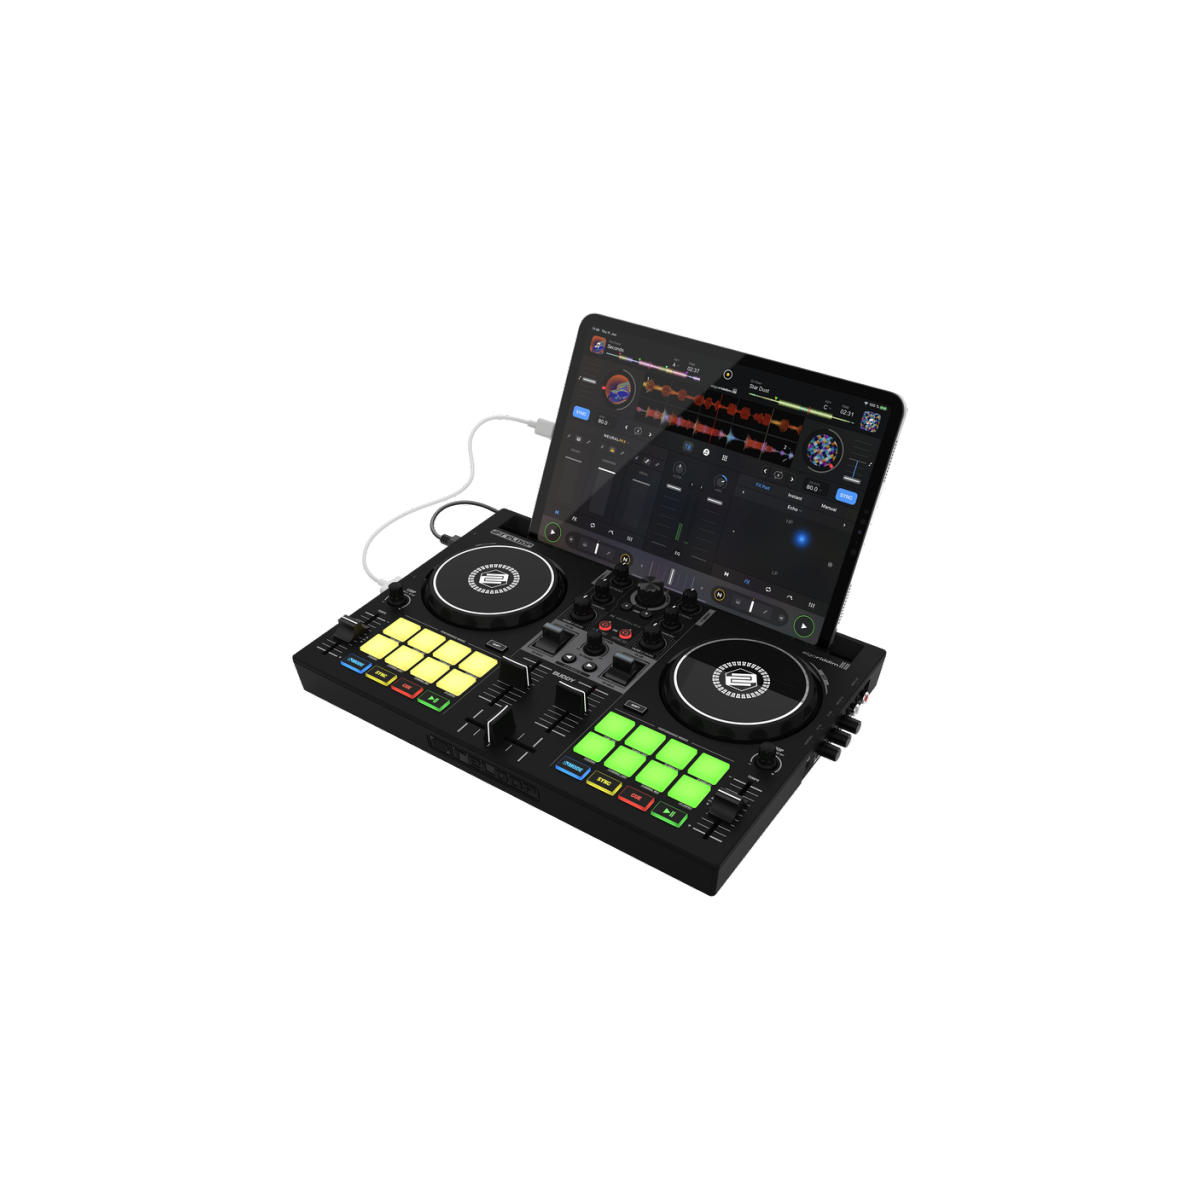 Contrôleurs DJ USB - Reloop - BUDDY